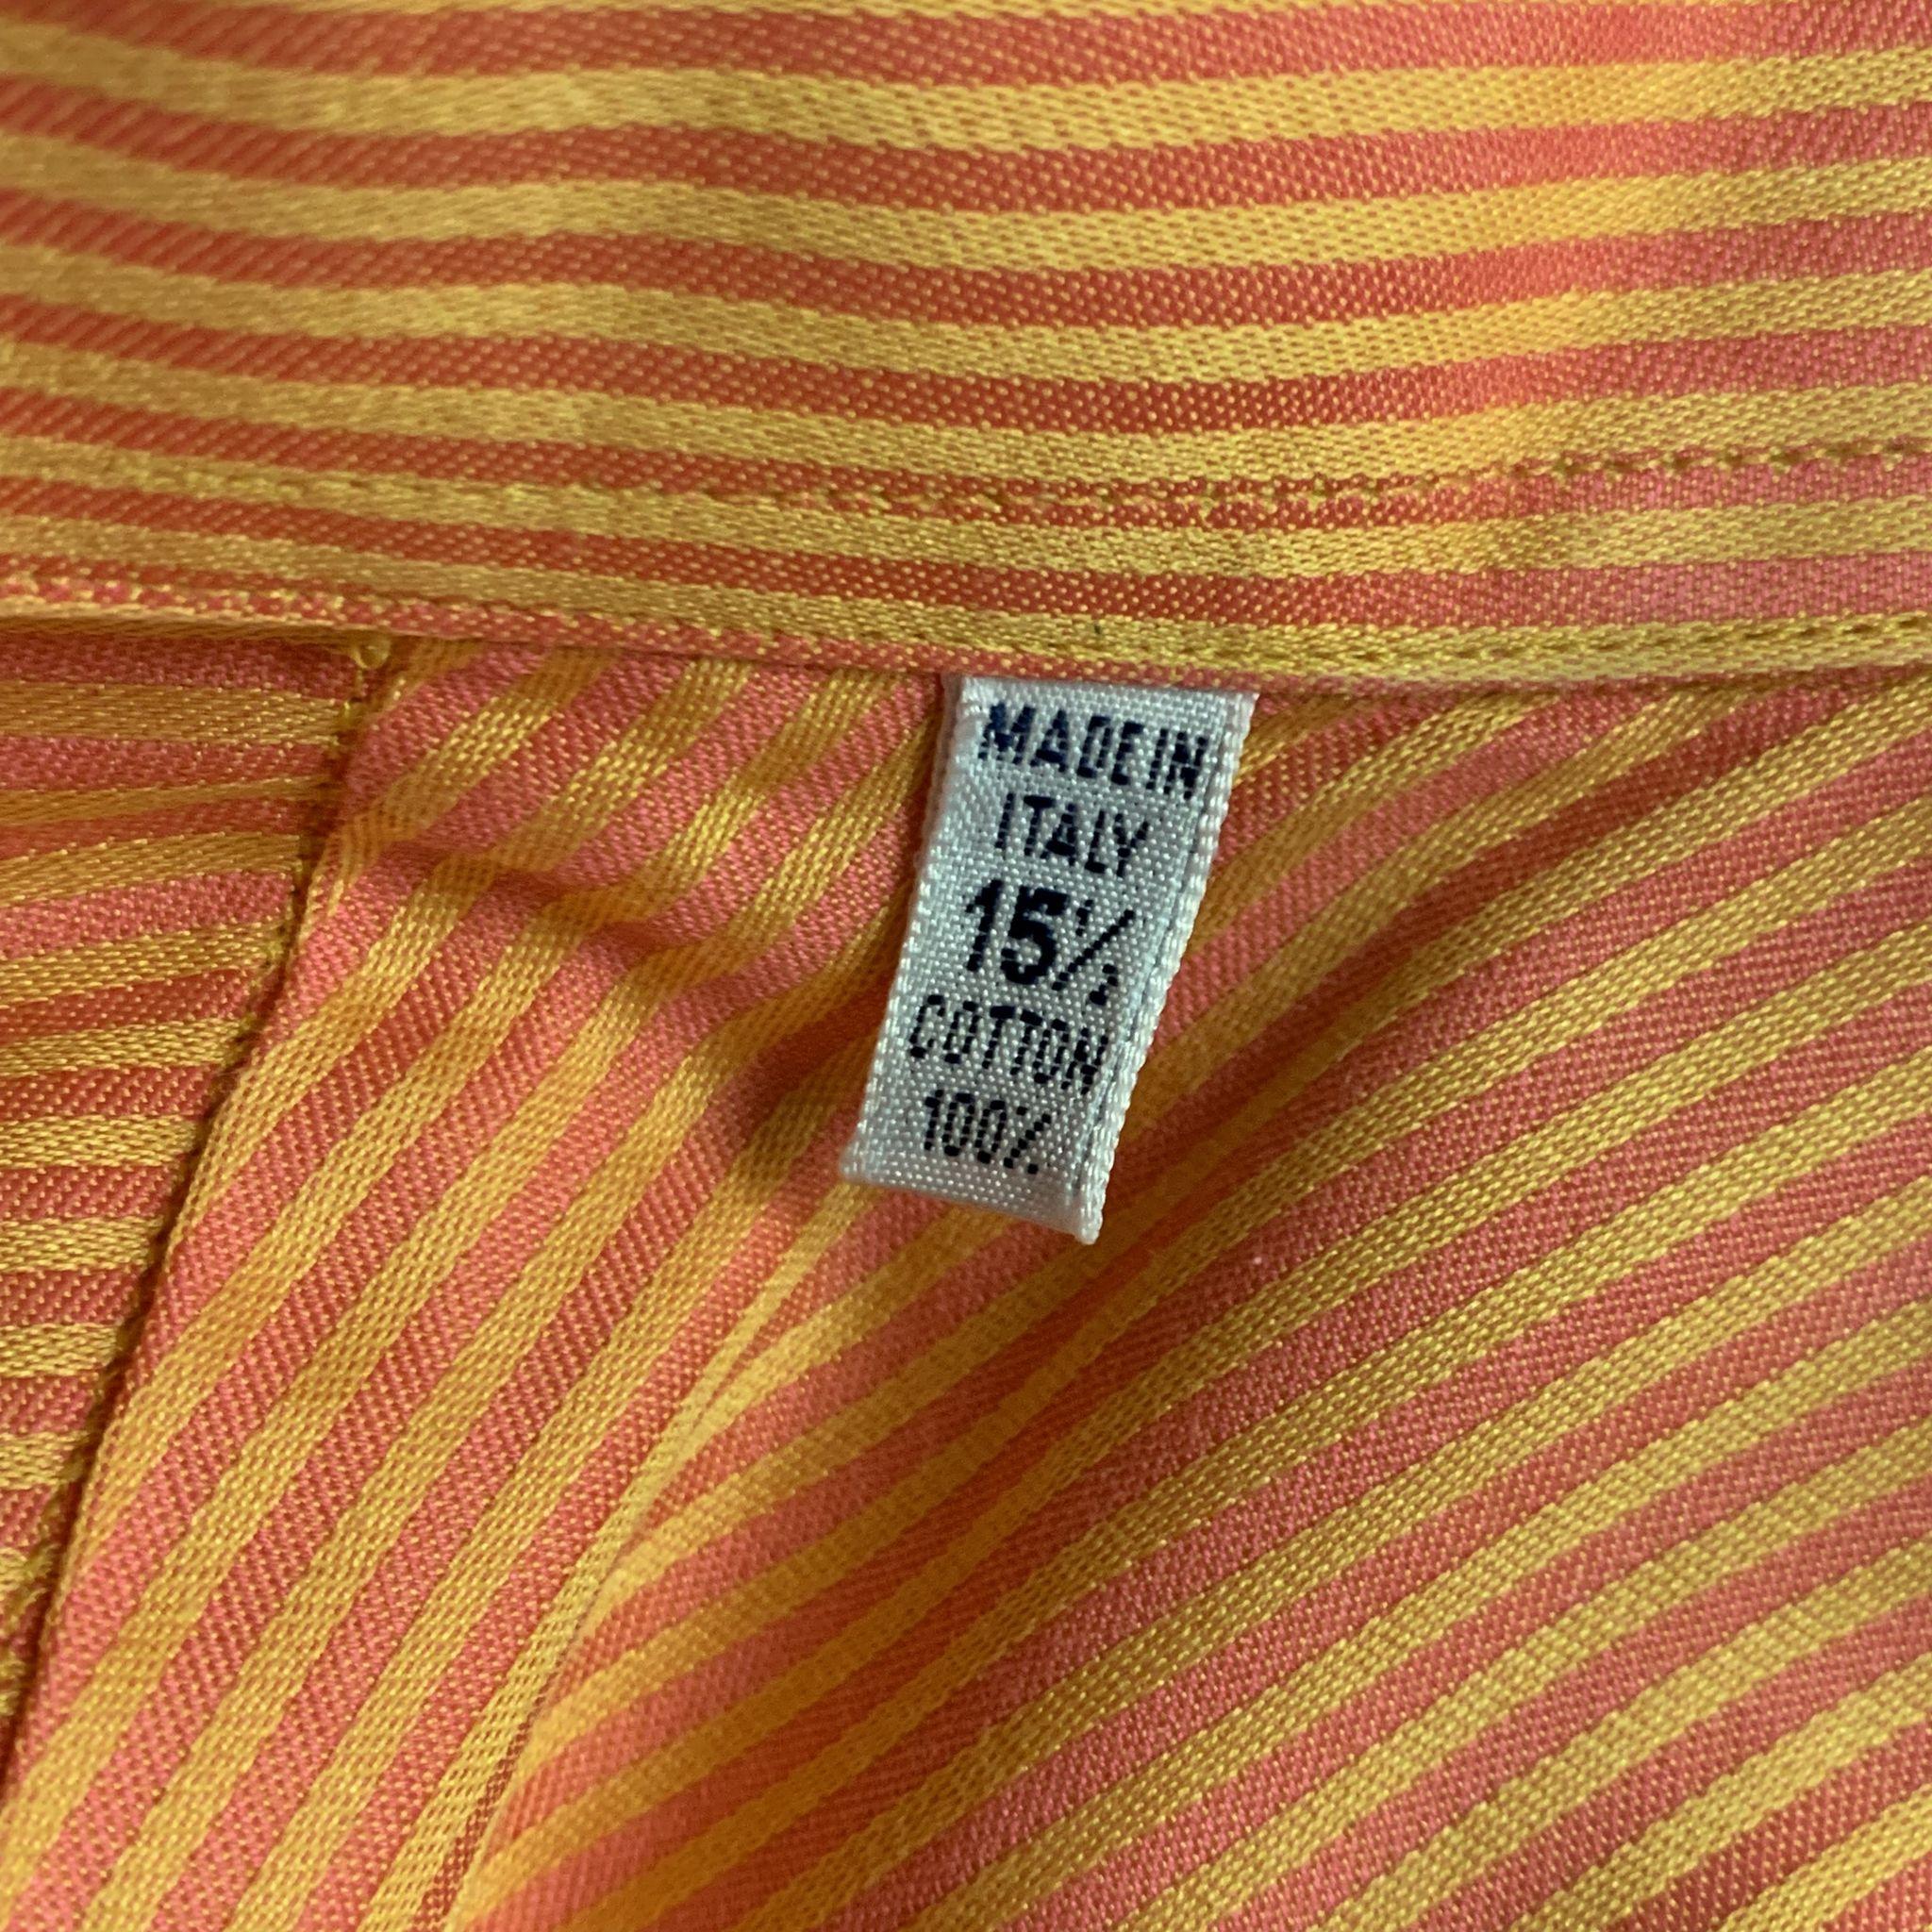 DUNCAN QUINN Size M Orange Stripe Cotton Button Up Long Sleeve Shirt 2